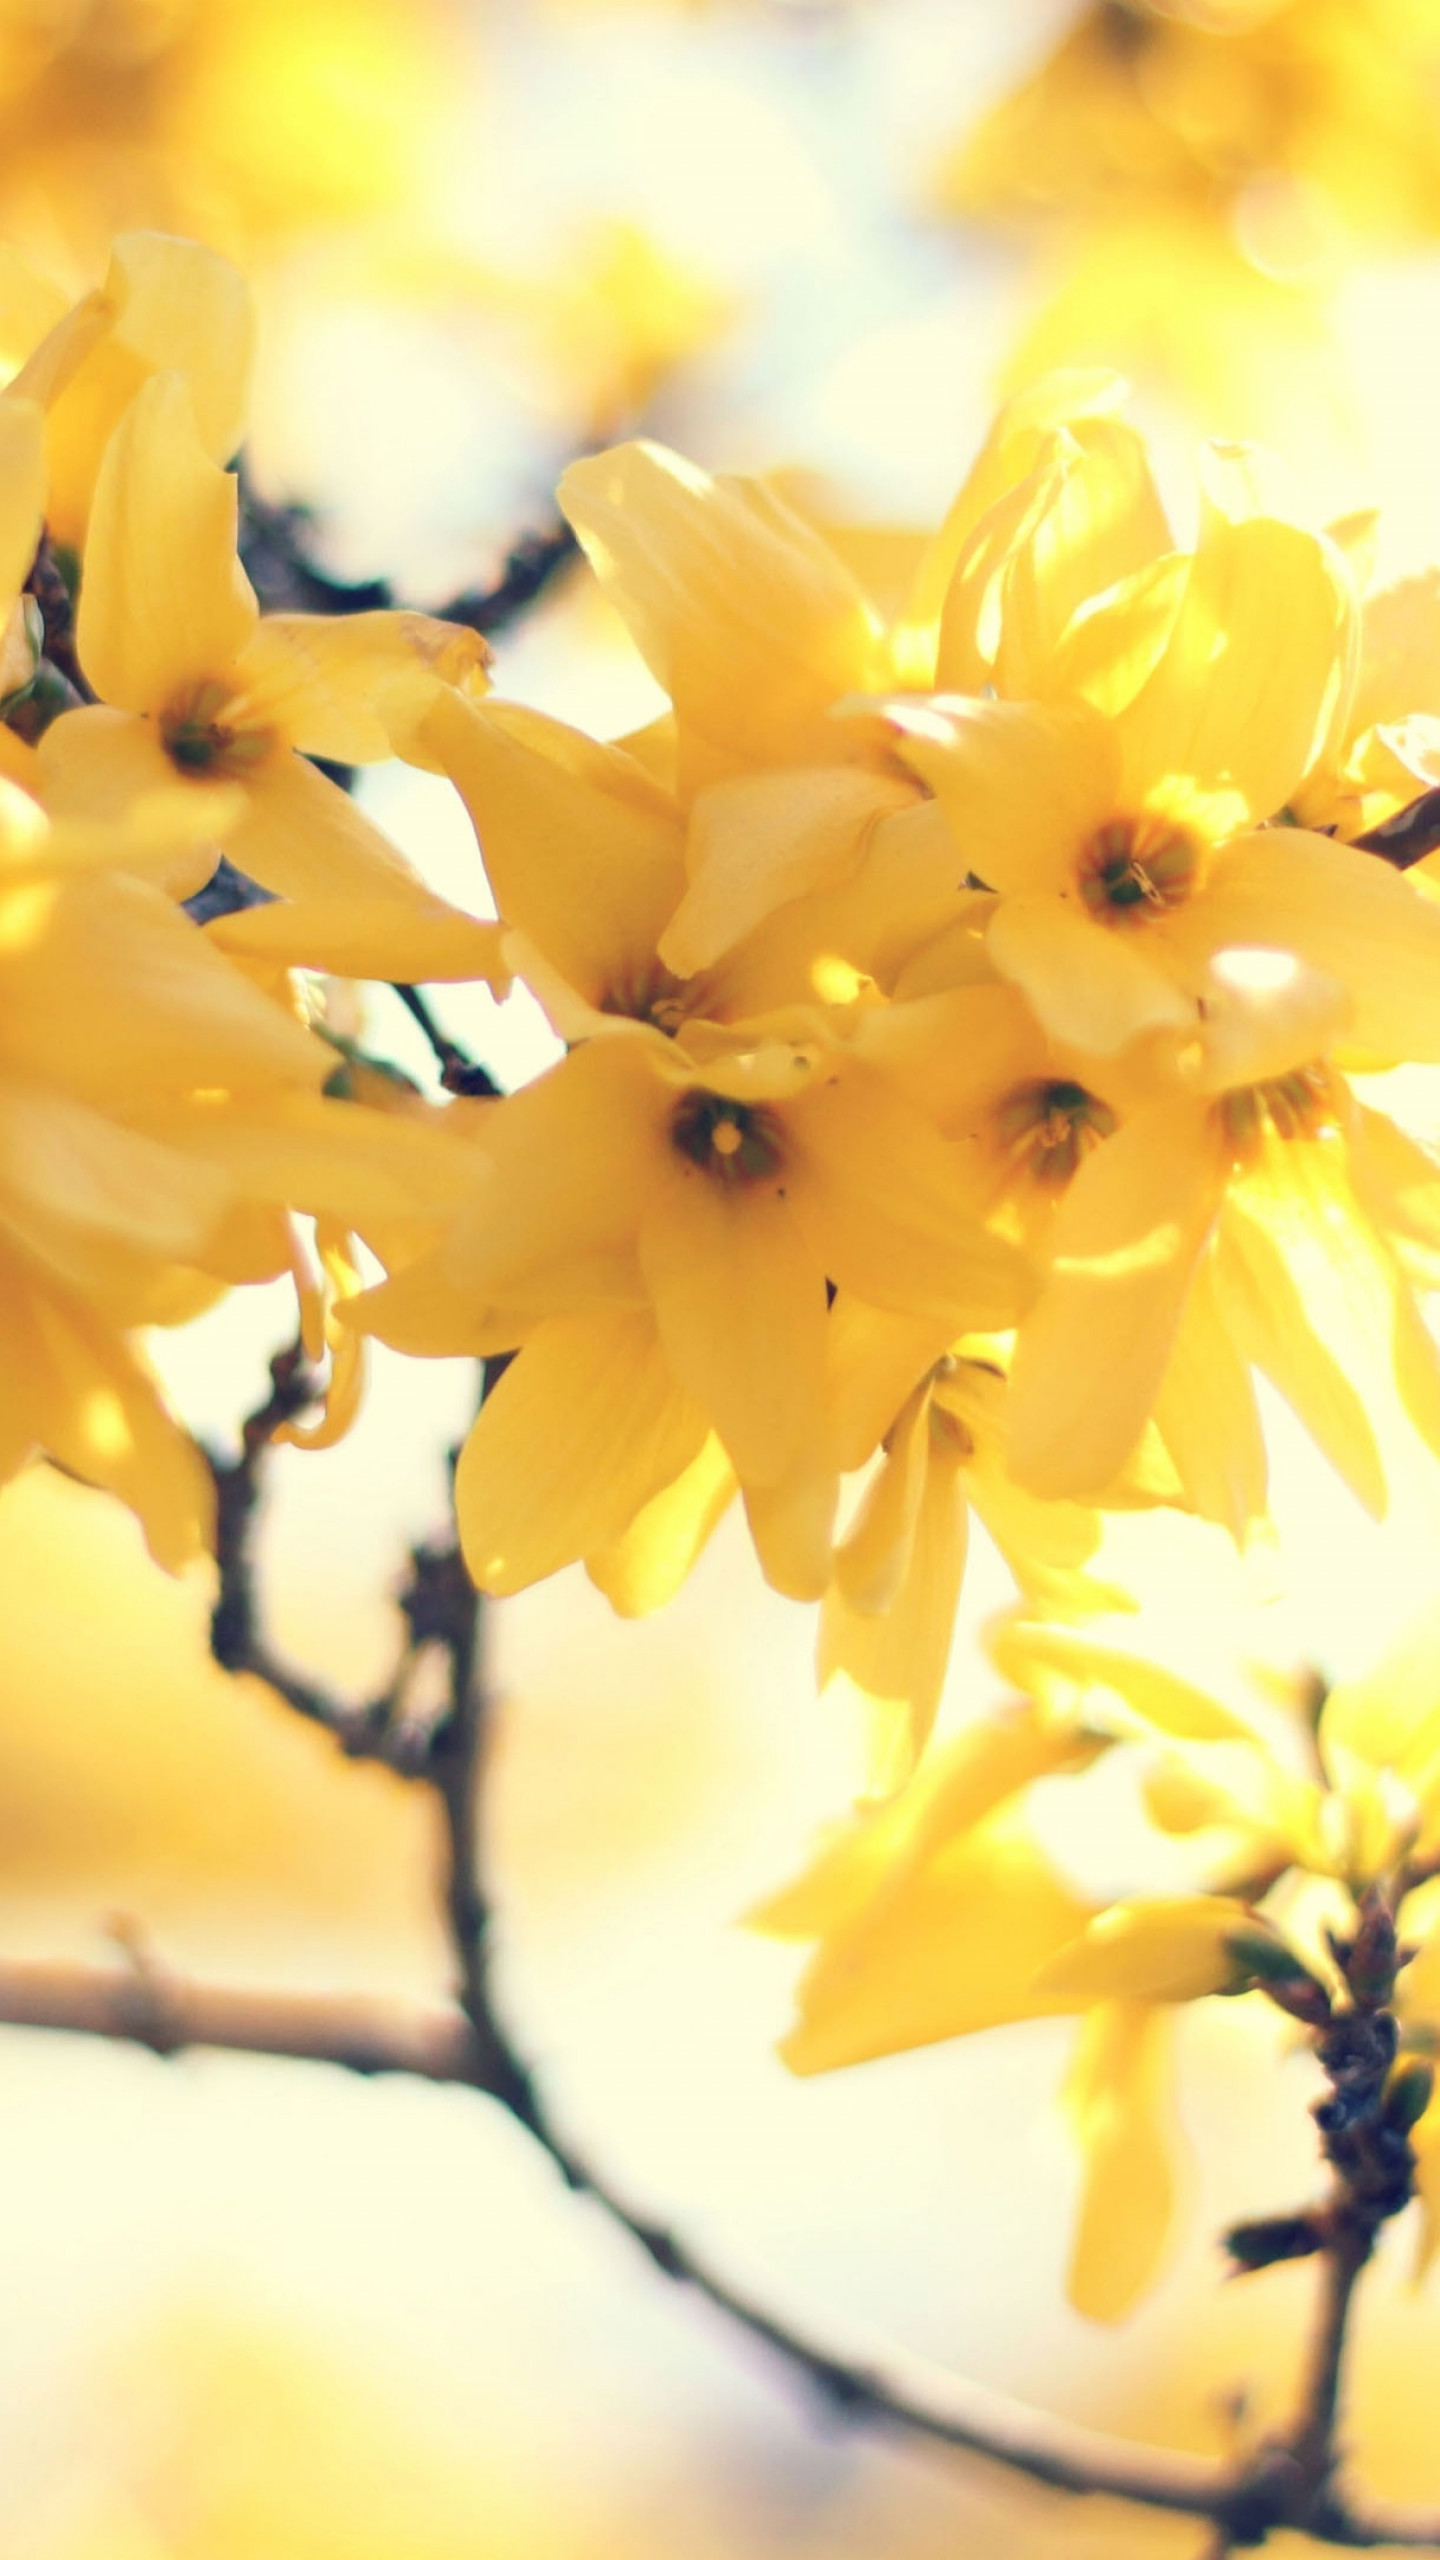 Flowers 5k. Желтые обои с цветочками фото. Пооевы5 цветы. Амазинг желтый